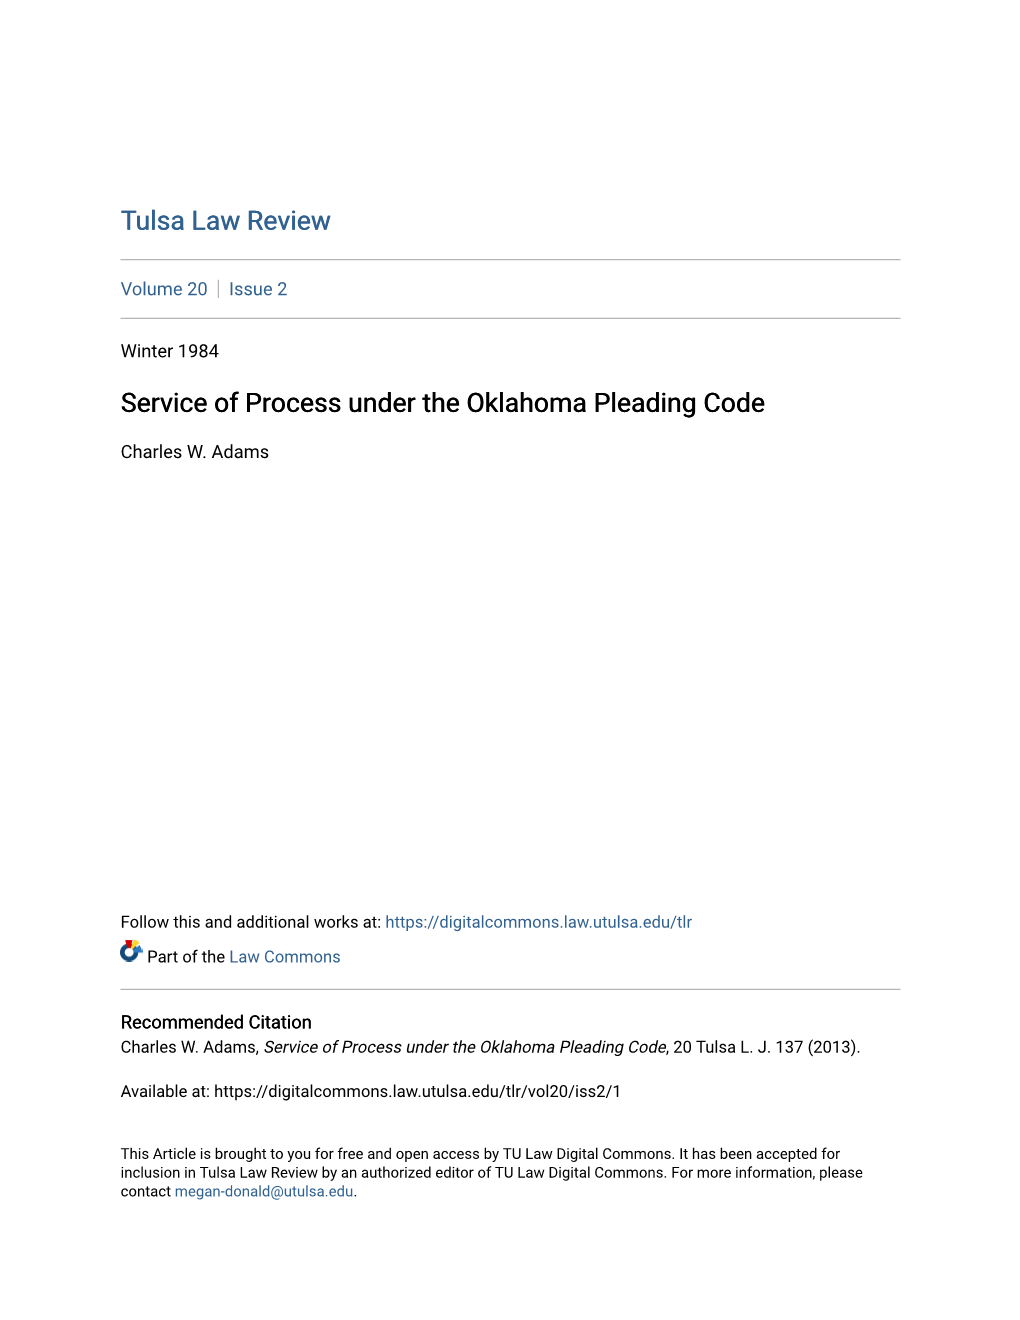 Service of Process Under the Oklahoma Pleading Code